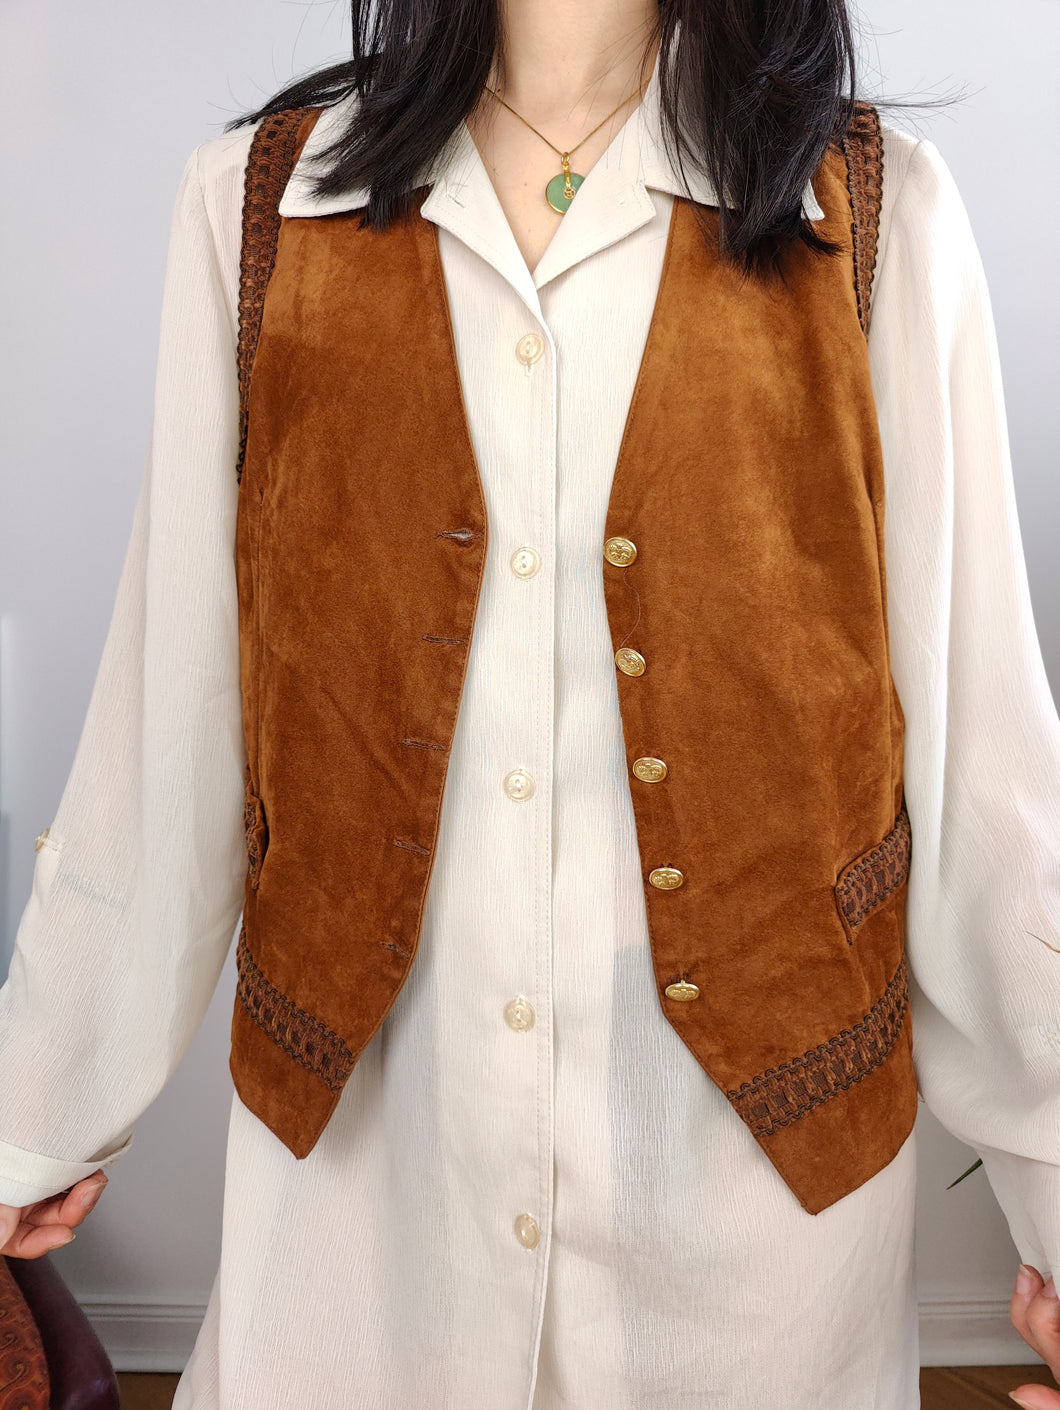 Vintage faux leather sleeveless vest boho brown tan suede waist coat jacket women Caldarell M